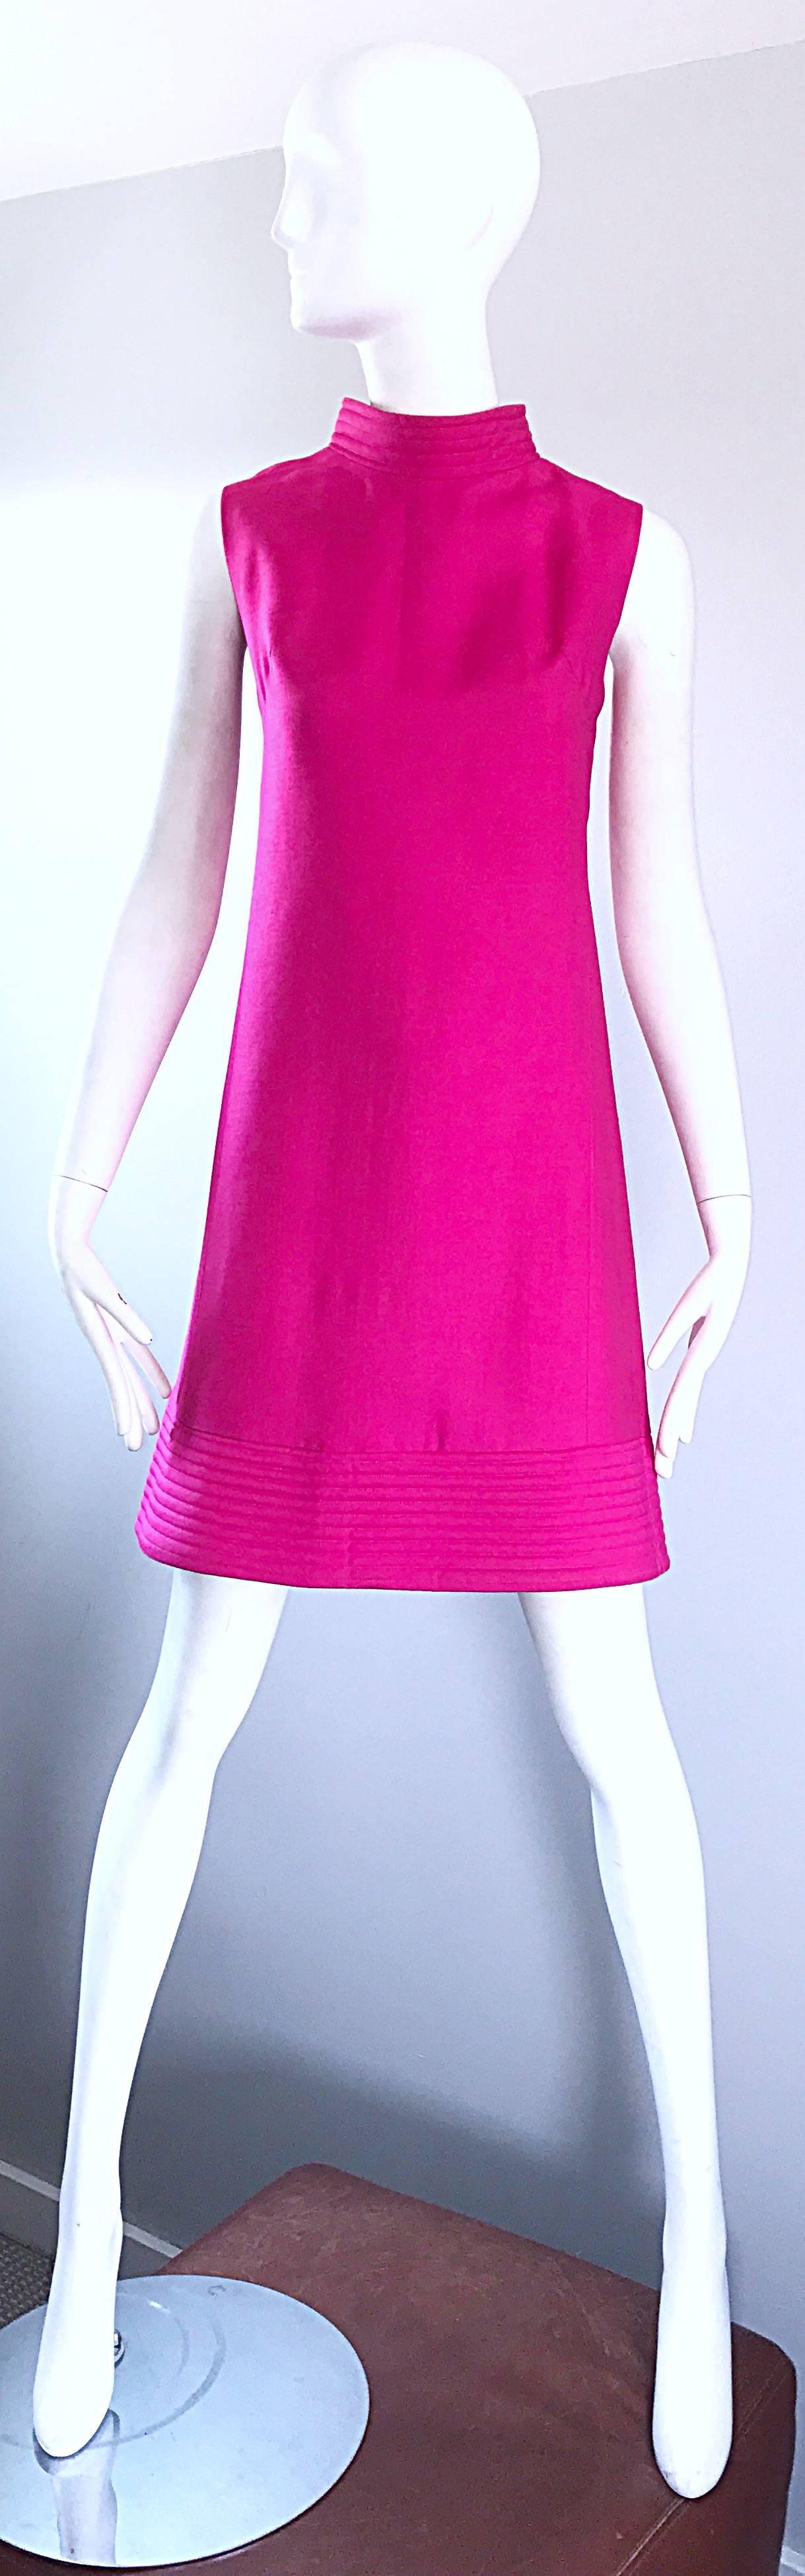 Chic 1960s Shocking Hot Pink Sleeveless Fuchsia Vintage High Neck Shift Dress 3